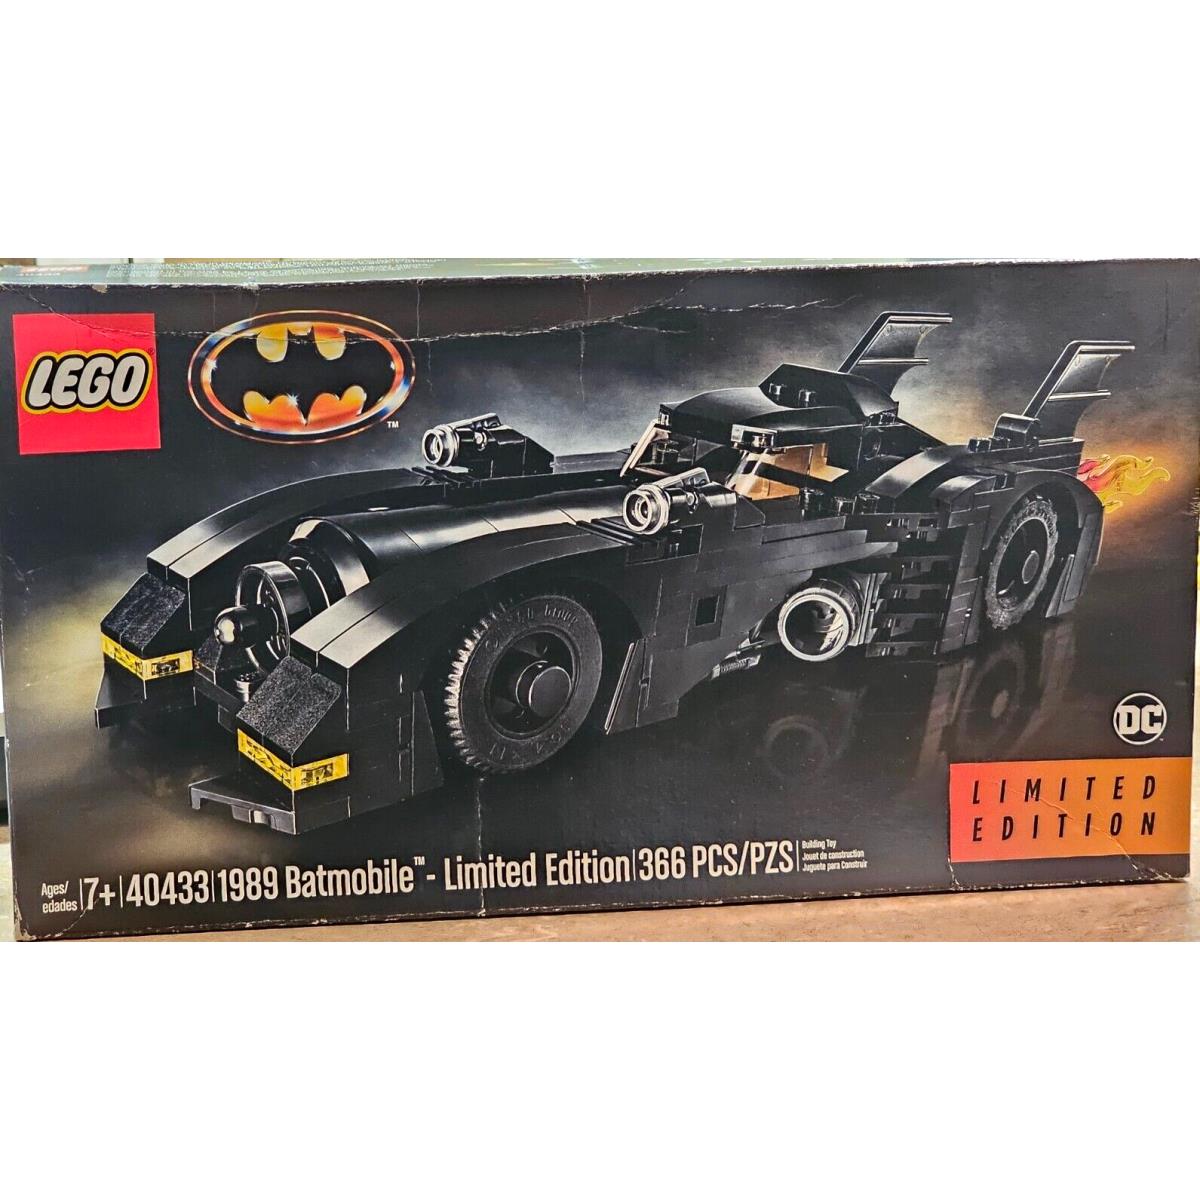 Lego DC Comics Super Heroes: 1989 Batmobile - Limited Edition 40433